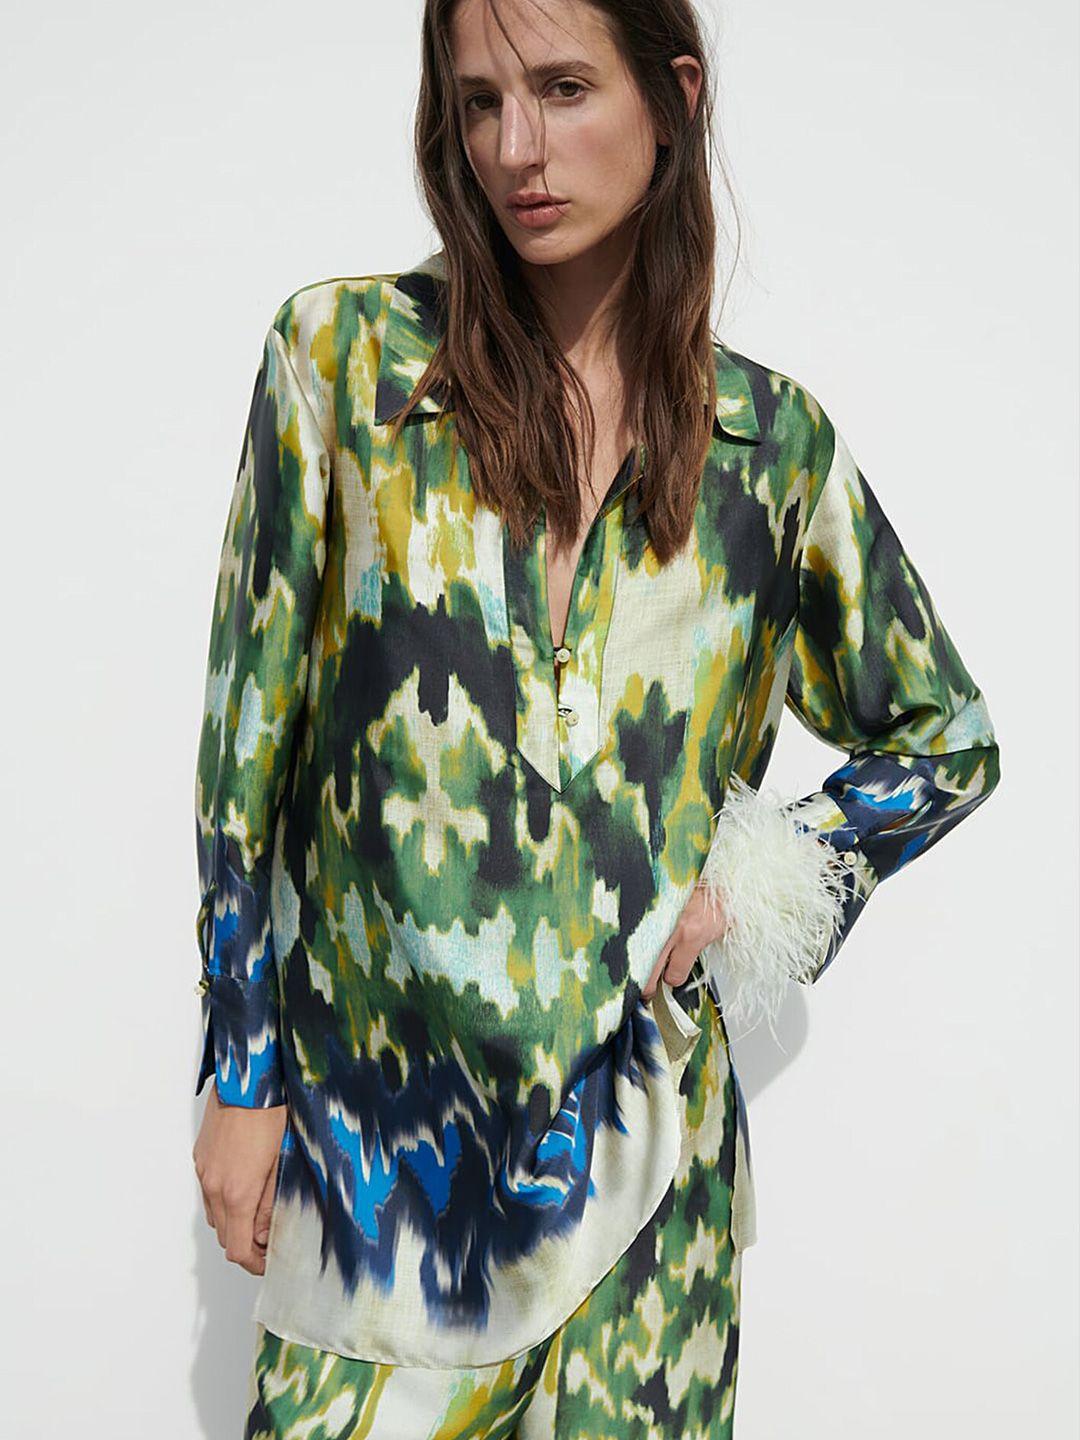 lulu & sky multicoloured print shirt style top